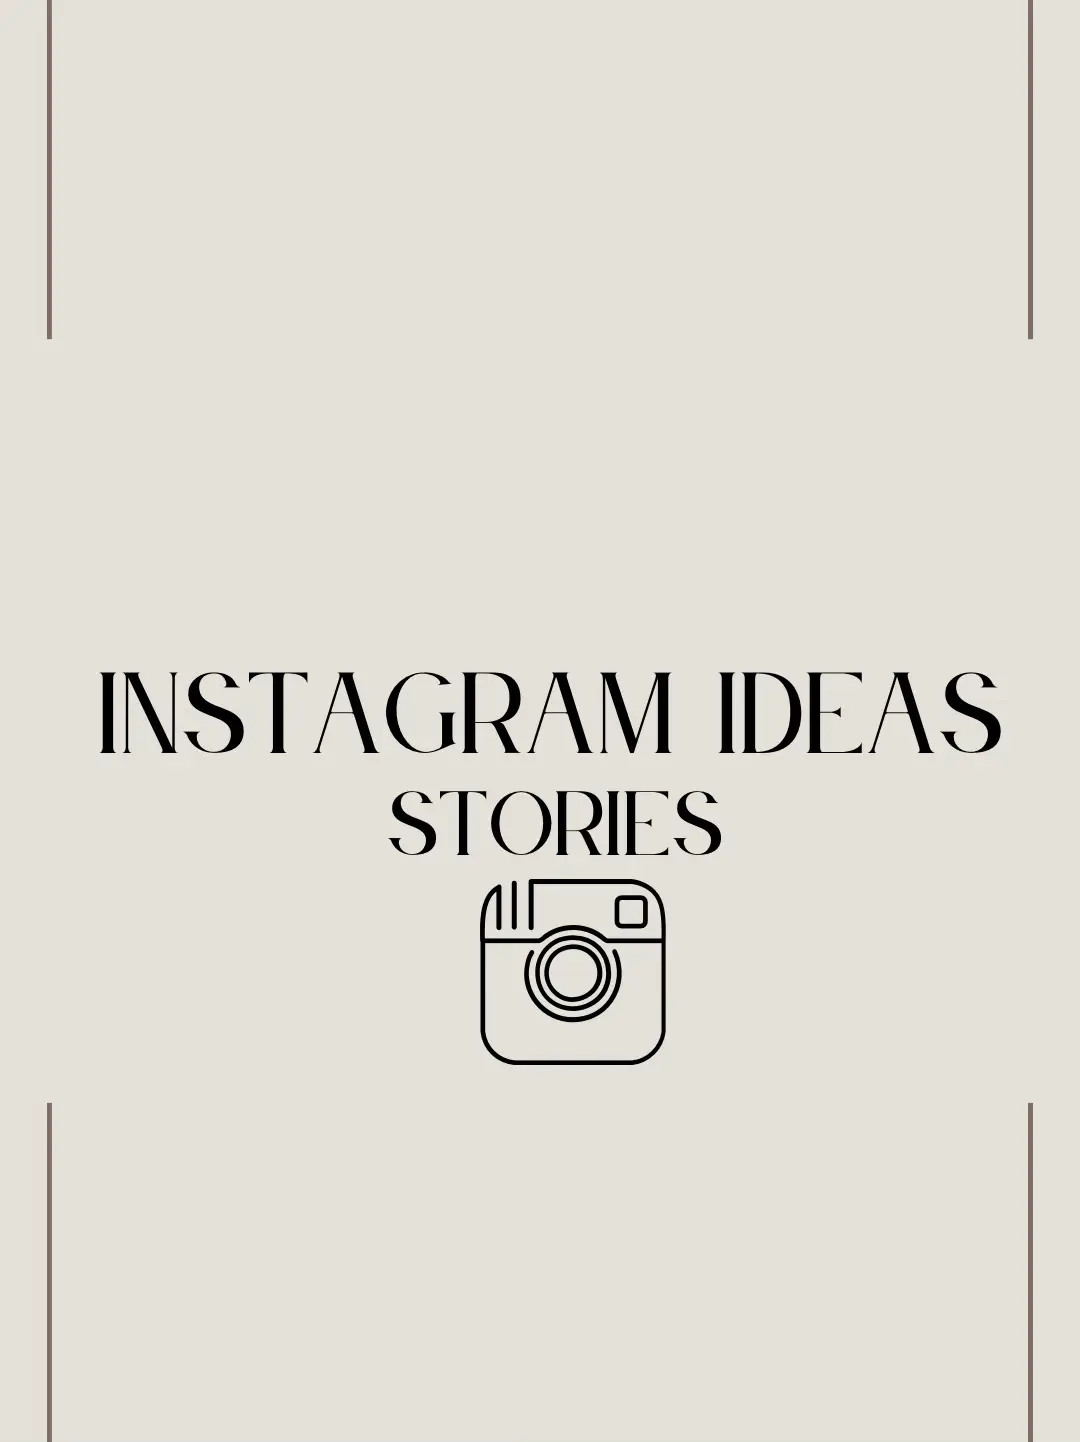 Instagram Ideas: Stories!, Gallery posted by Jordyn Mullins